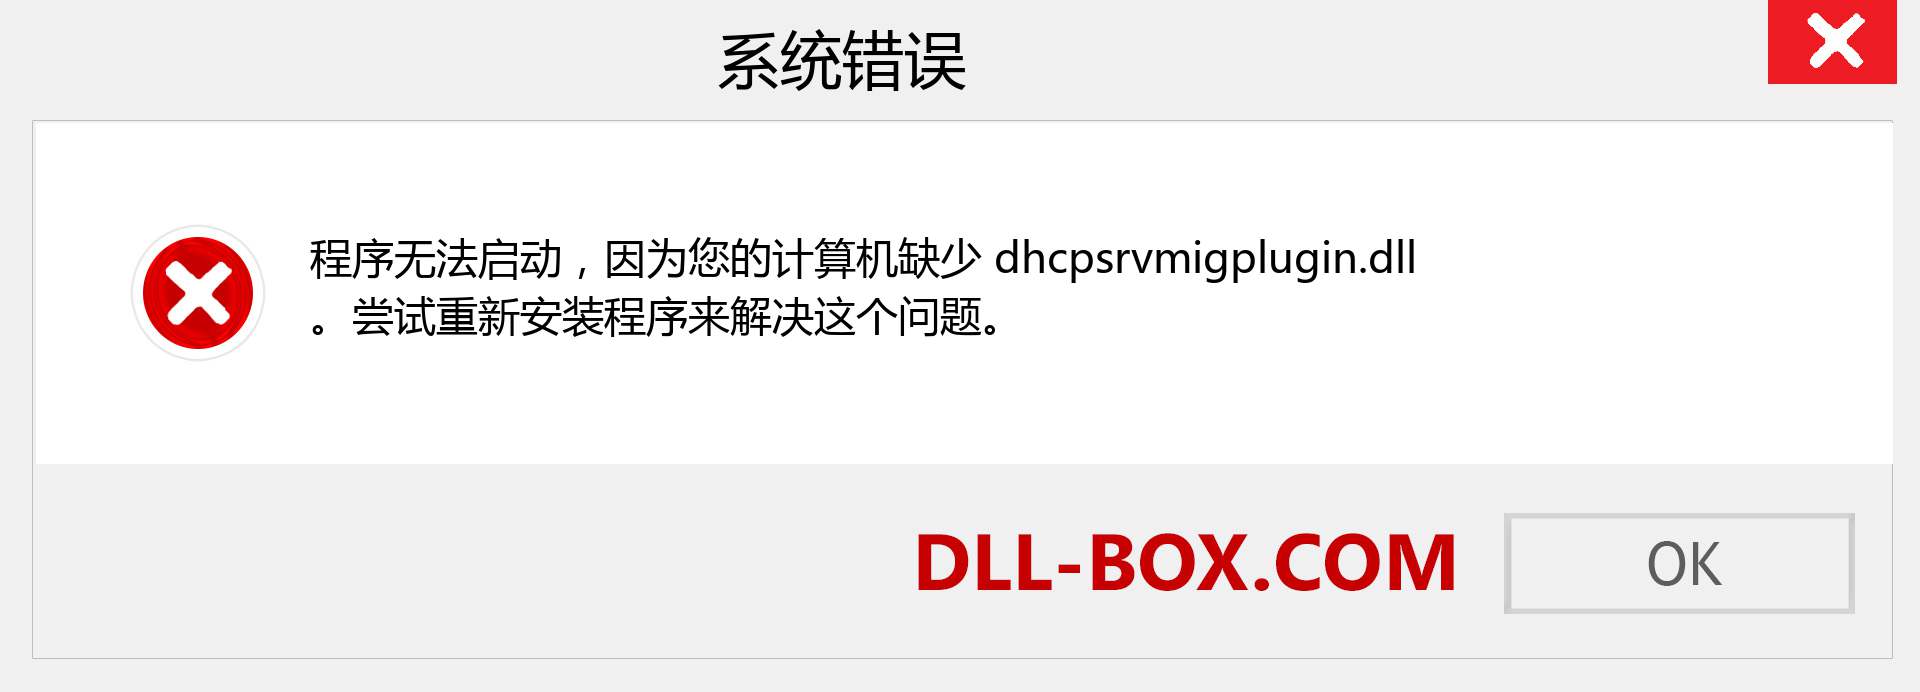 dhcpsrvmigplugin.dll 文件丢失？。 适用于 Windows 7、8、10 的下载 - 修复 Windows、照片、图像上的 dhcpsrvmigplugin dll 丢失错误